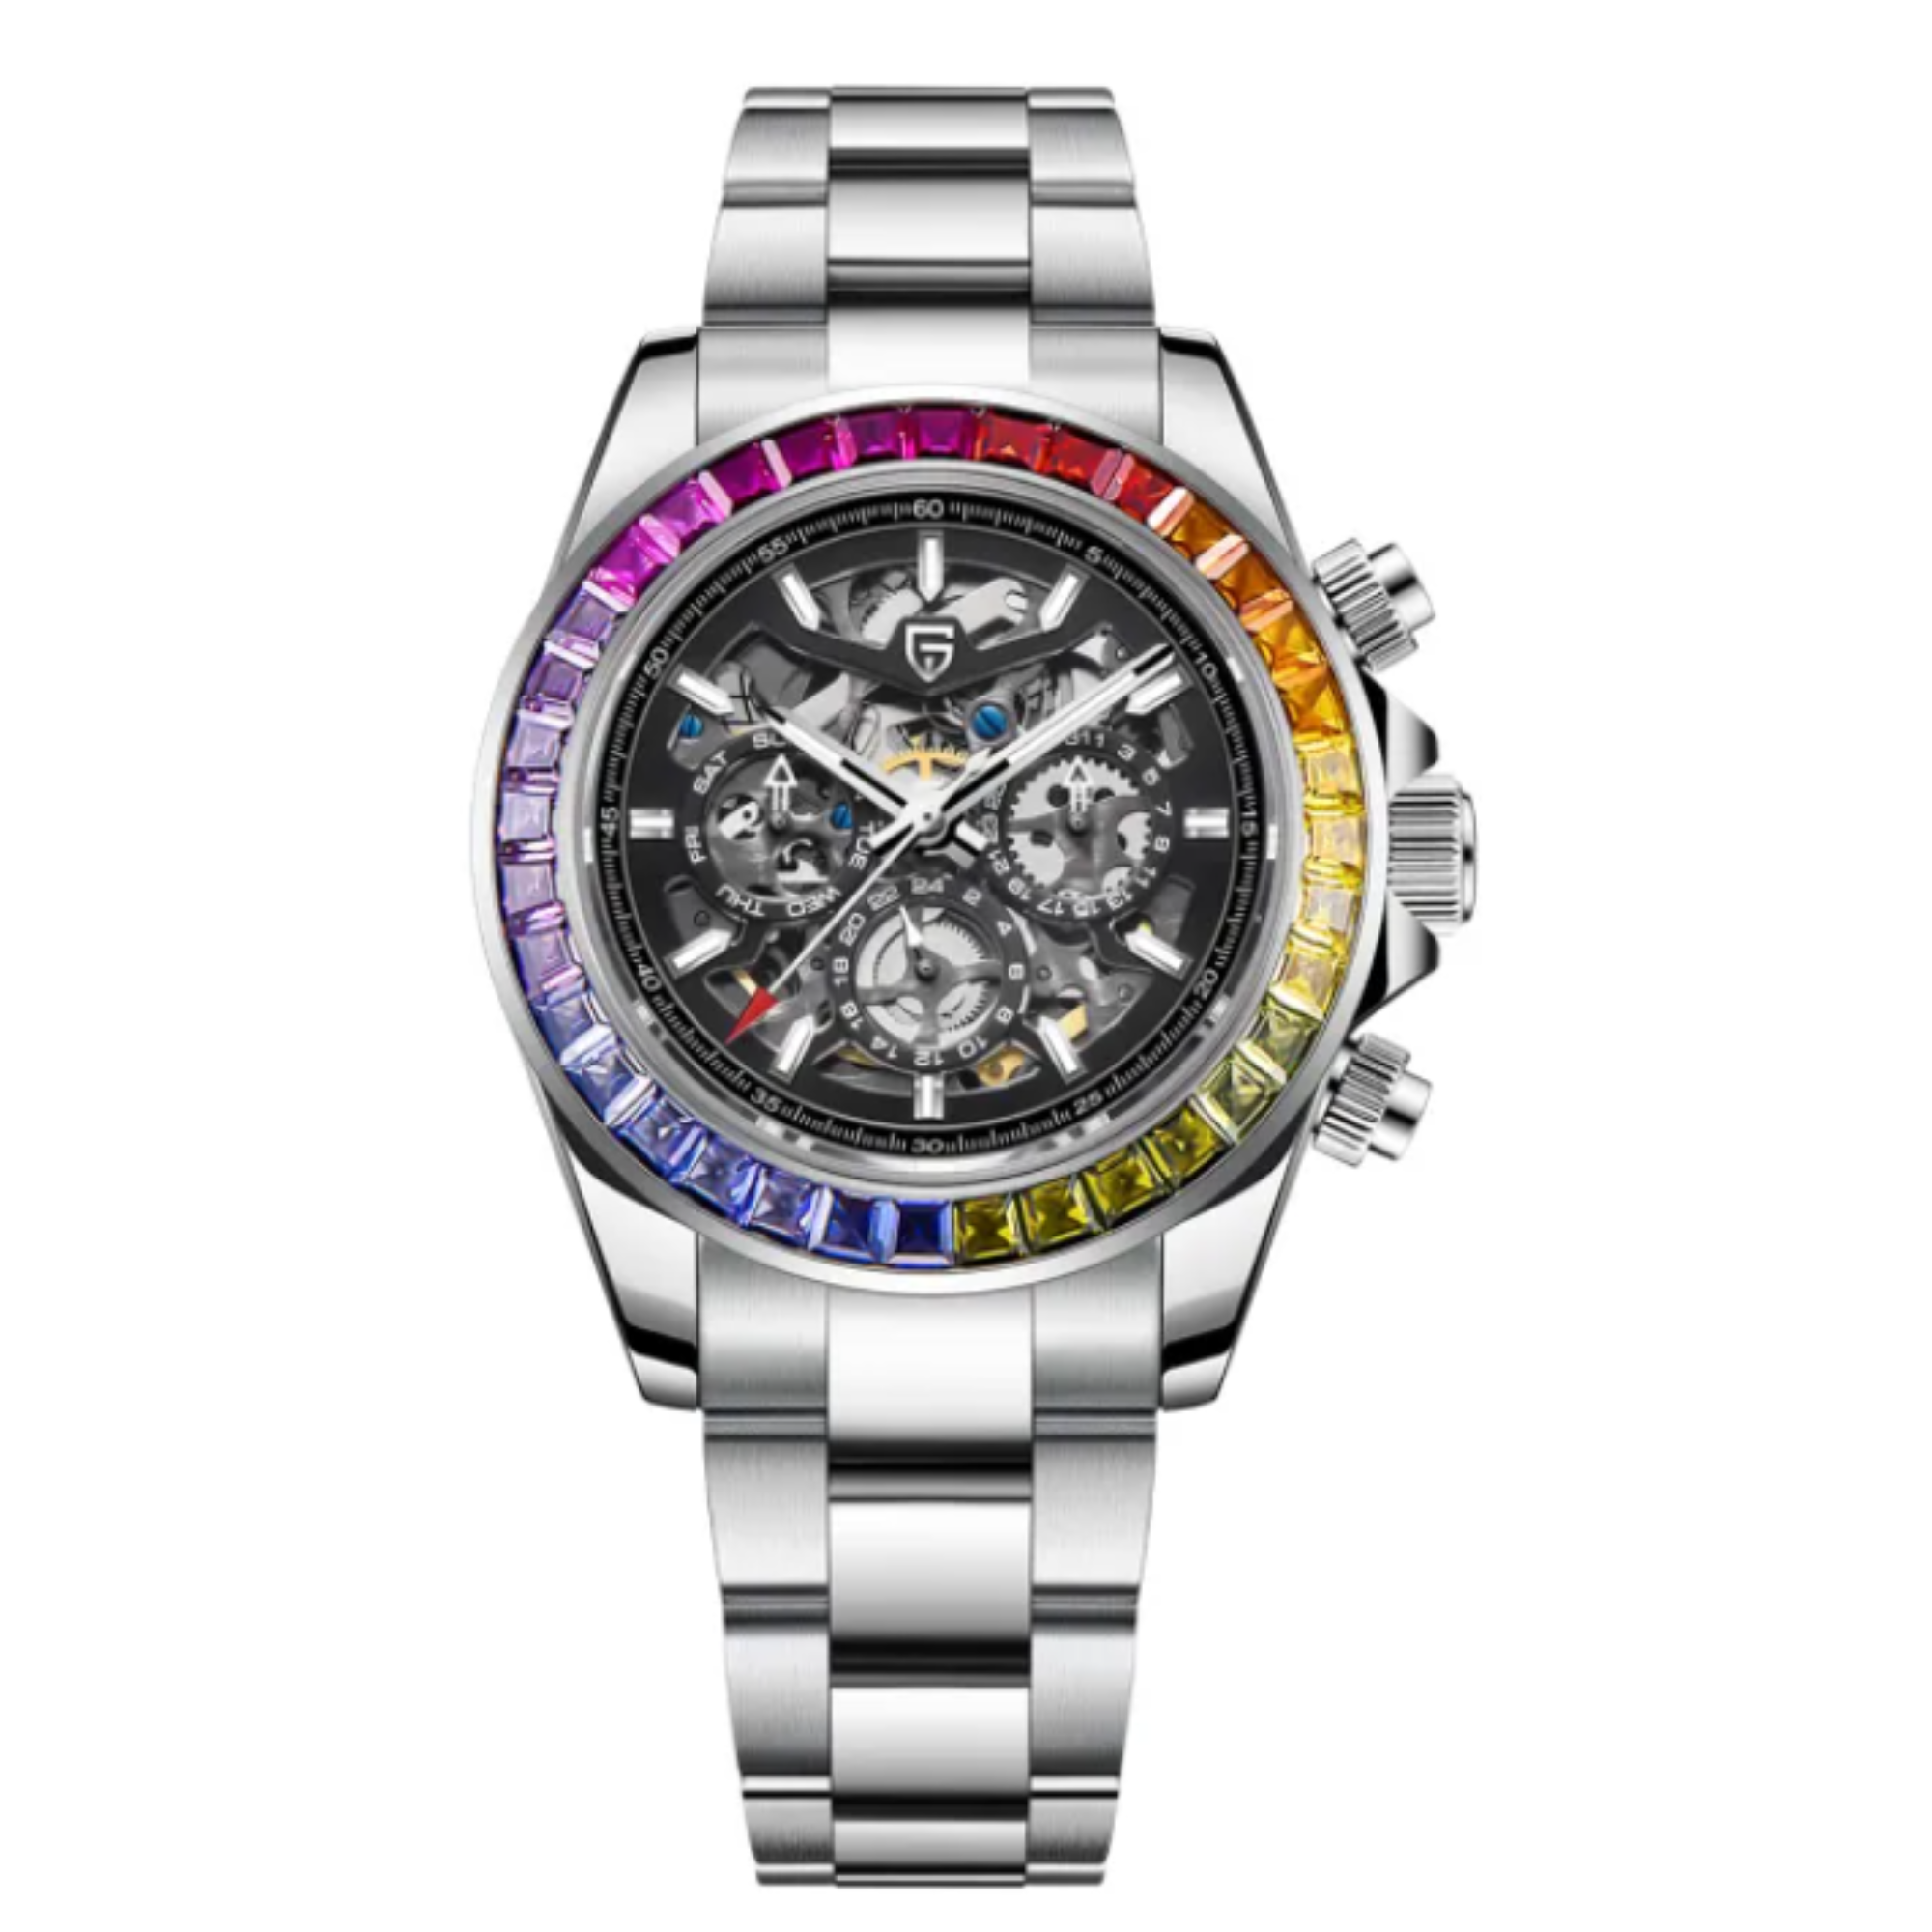 PAGANI DESIGN PD-1777 Automatic Stainless Steel Skeleton Mechanical Wrist Watch - Rainbow Bezel